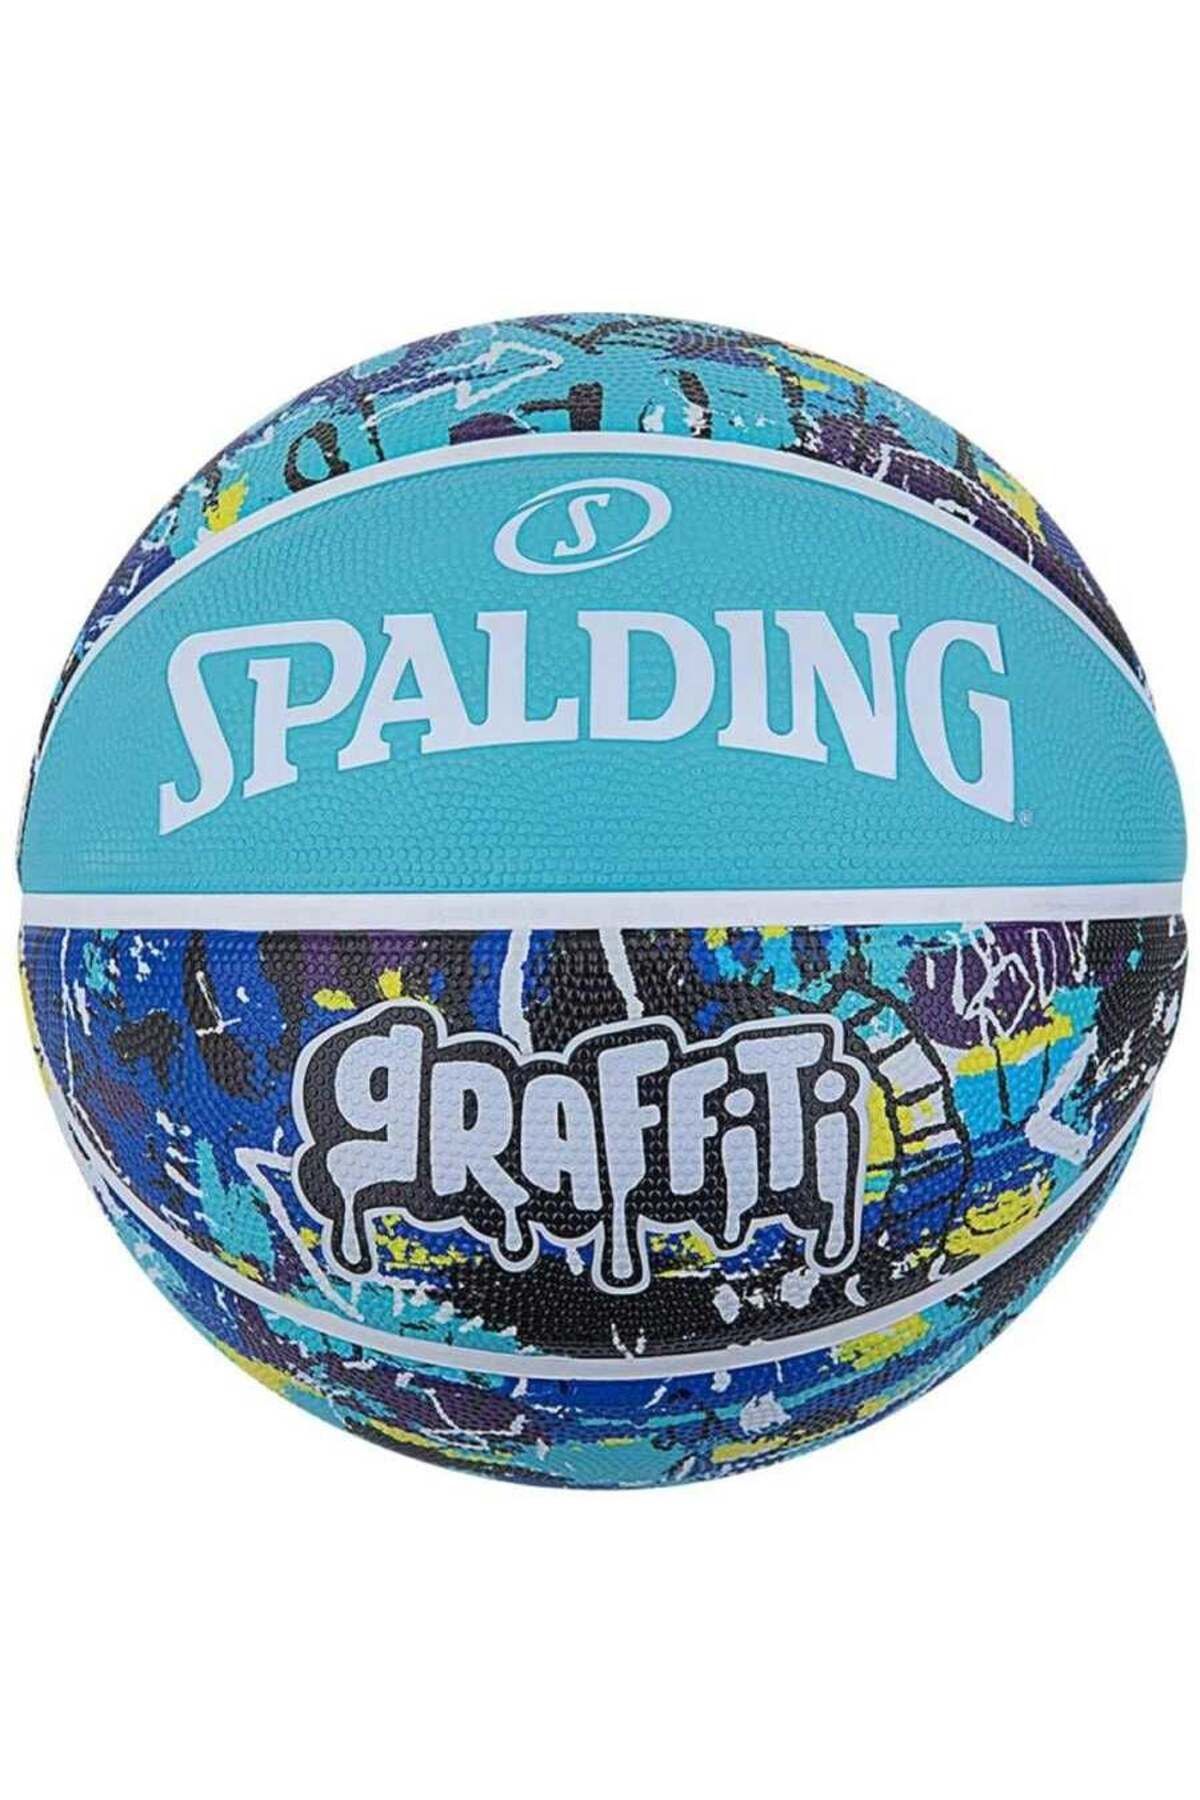 Spalding Blue Graffiti Sz7 2021 Basket Topu 84373z